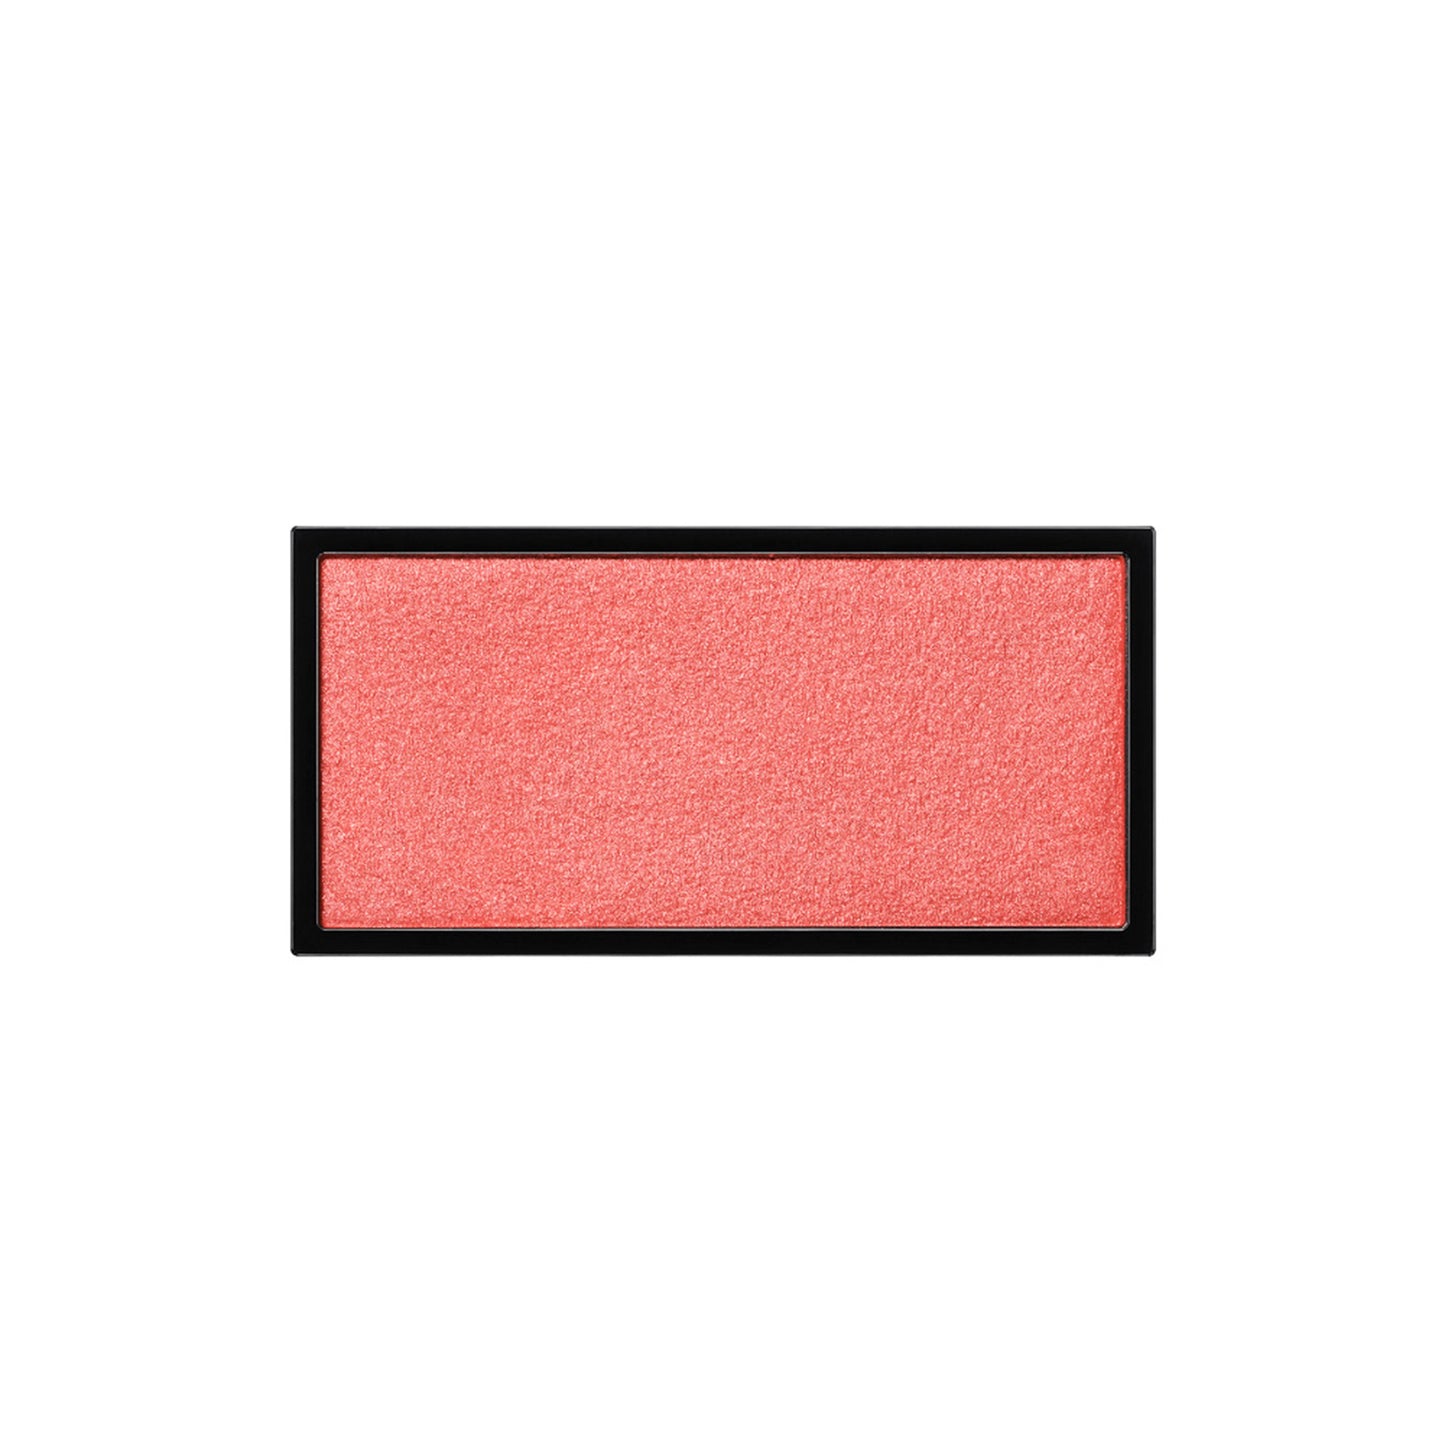 A rectangle shaped powder blush pan in a reddish-orange